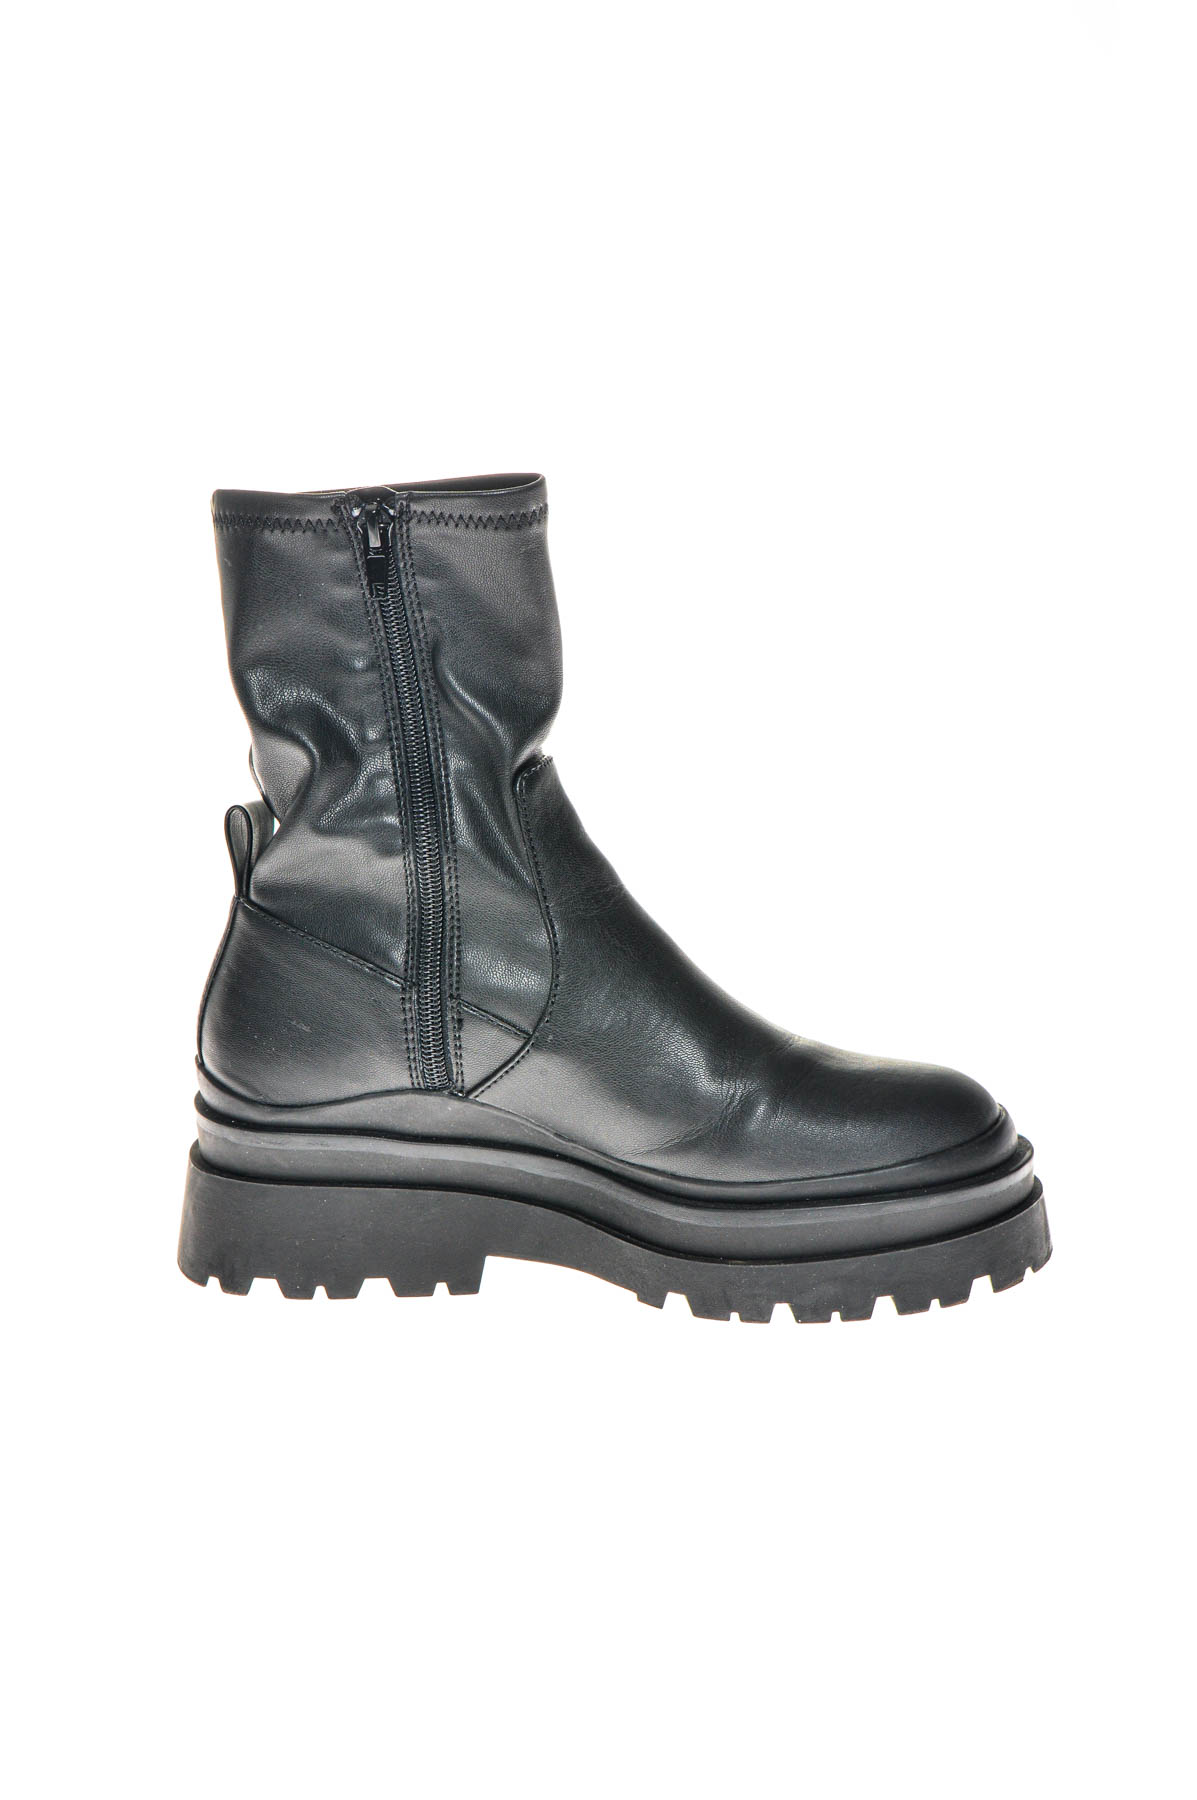 Women's boots - ALDO - 2